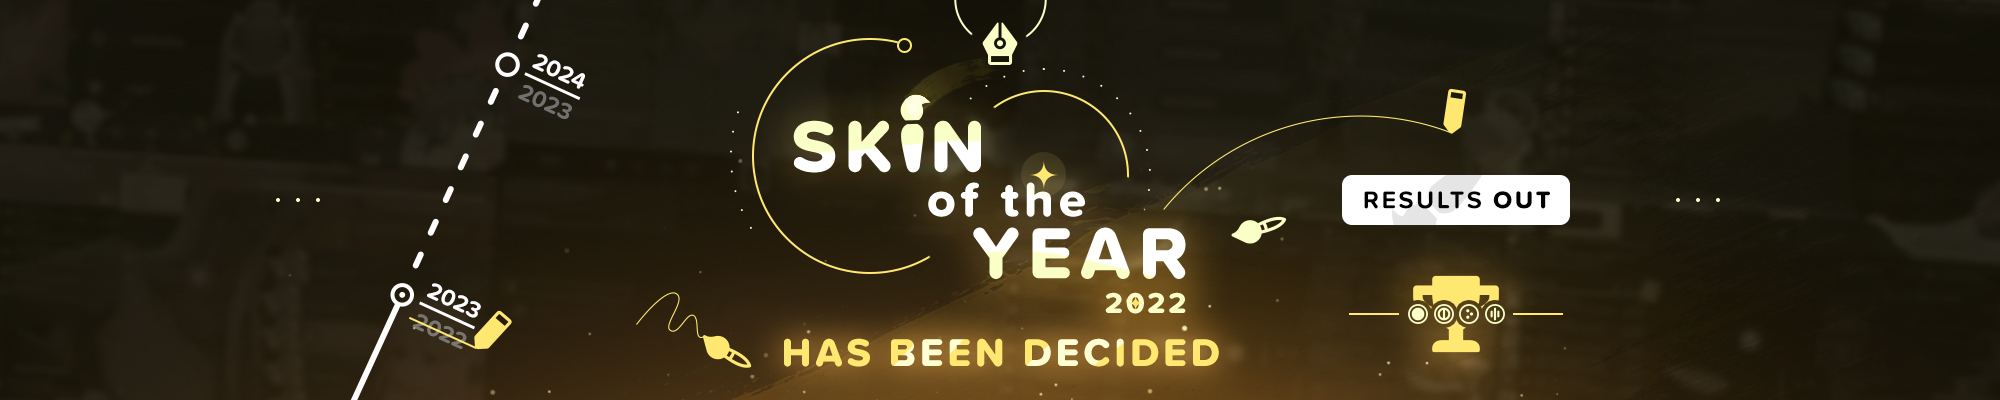 Download 50 Best OSU! Skins in 2023